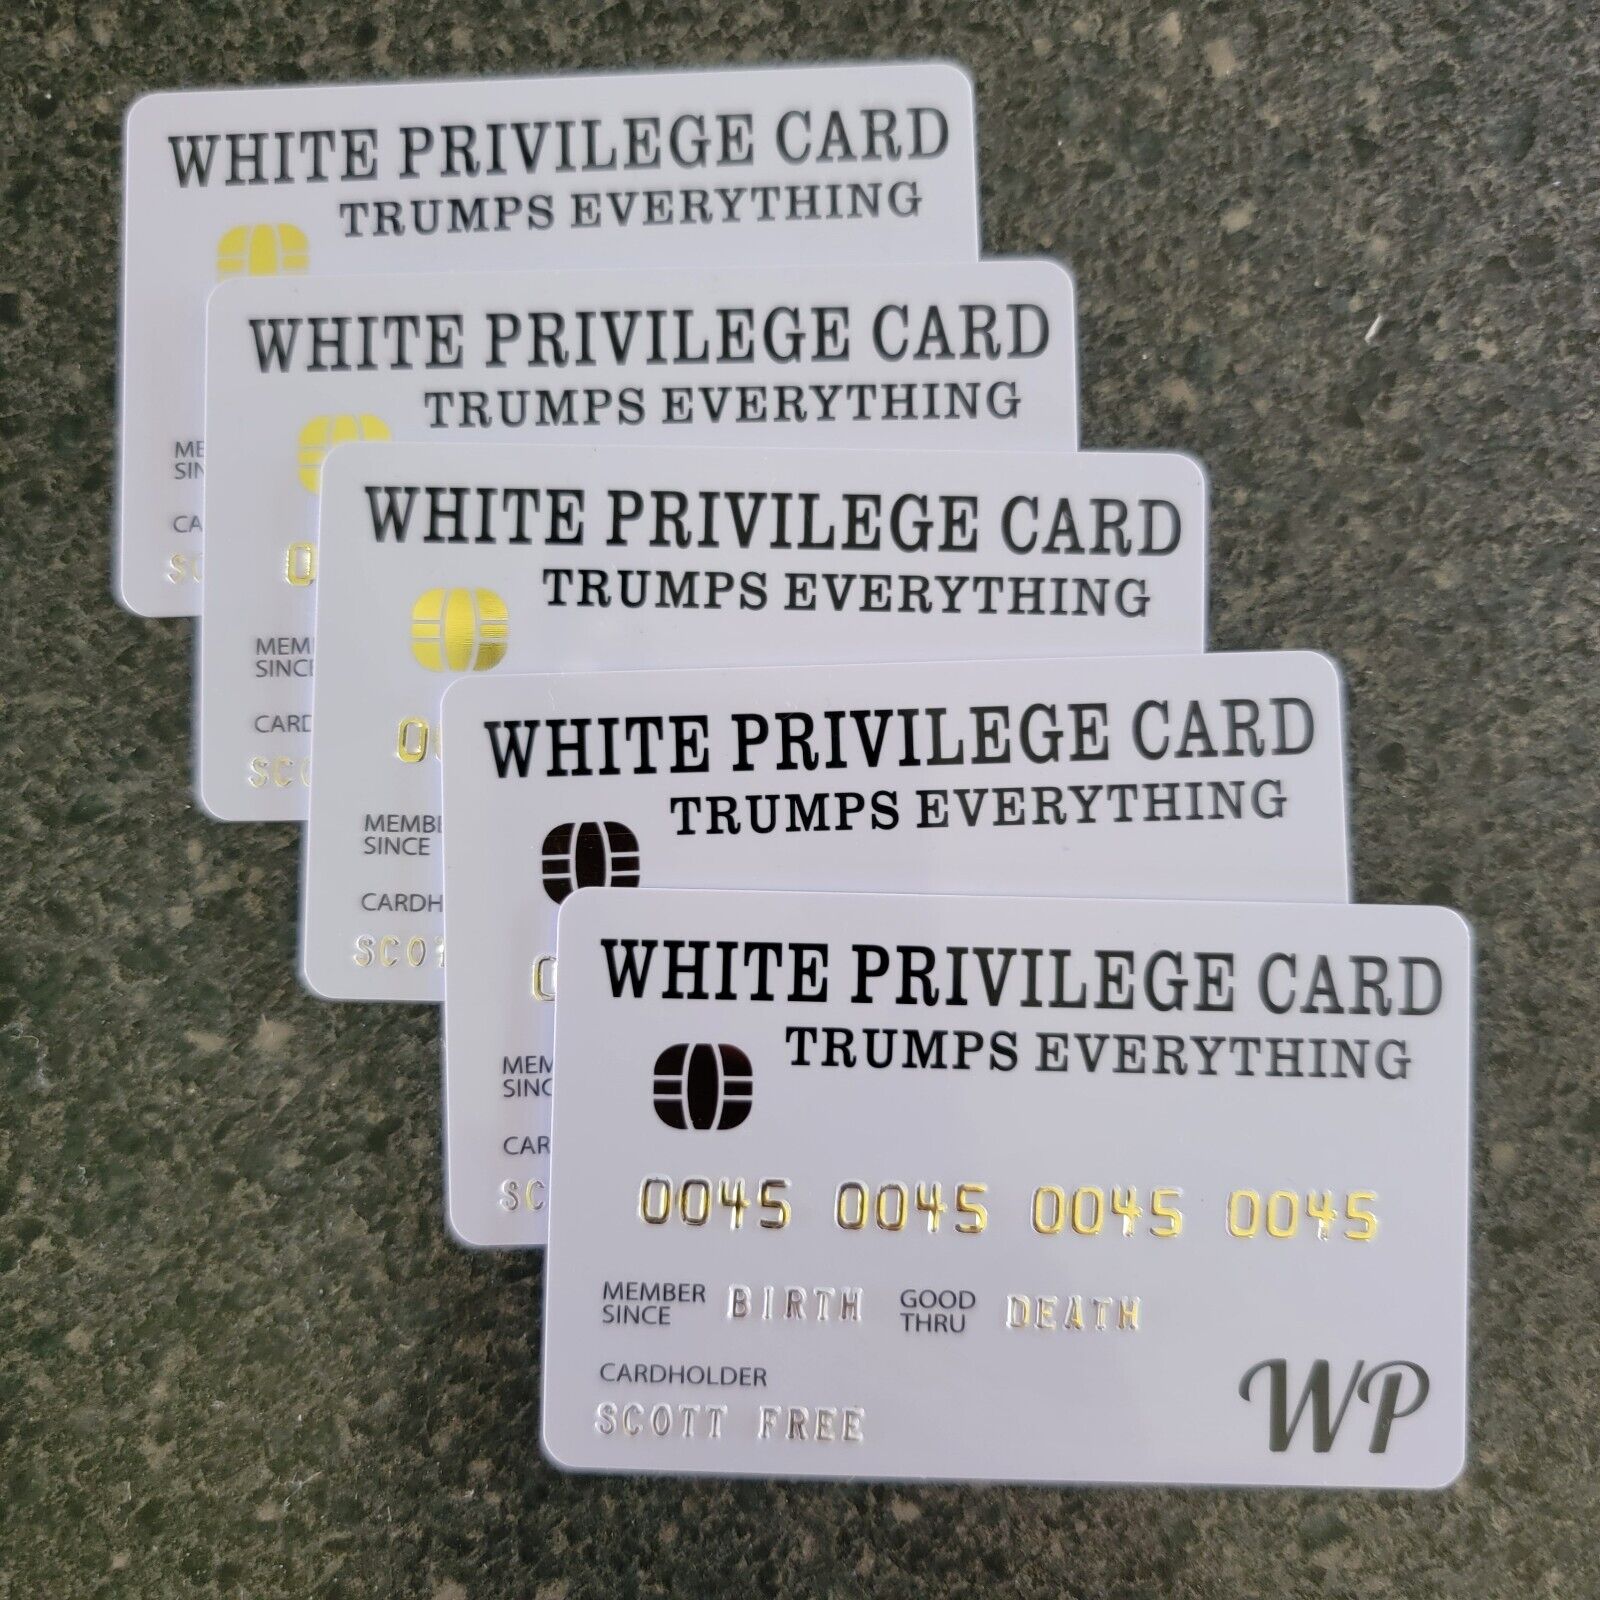 W. Whit Privilege Card Novelty Joke Credit Card  X5 Trump #45